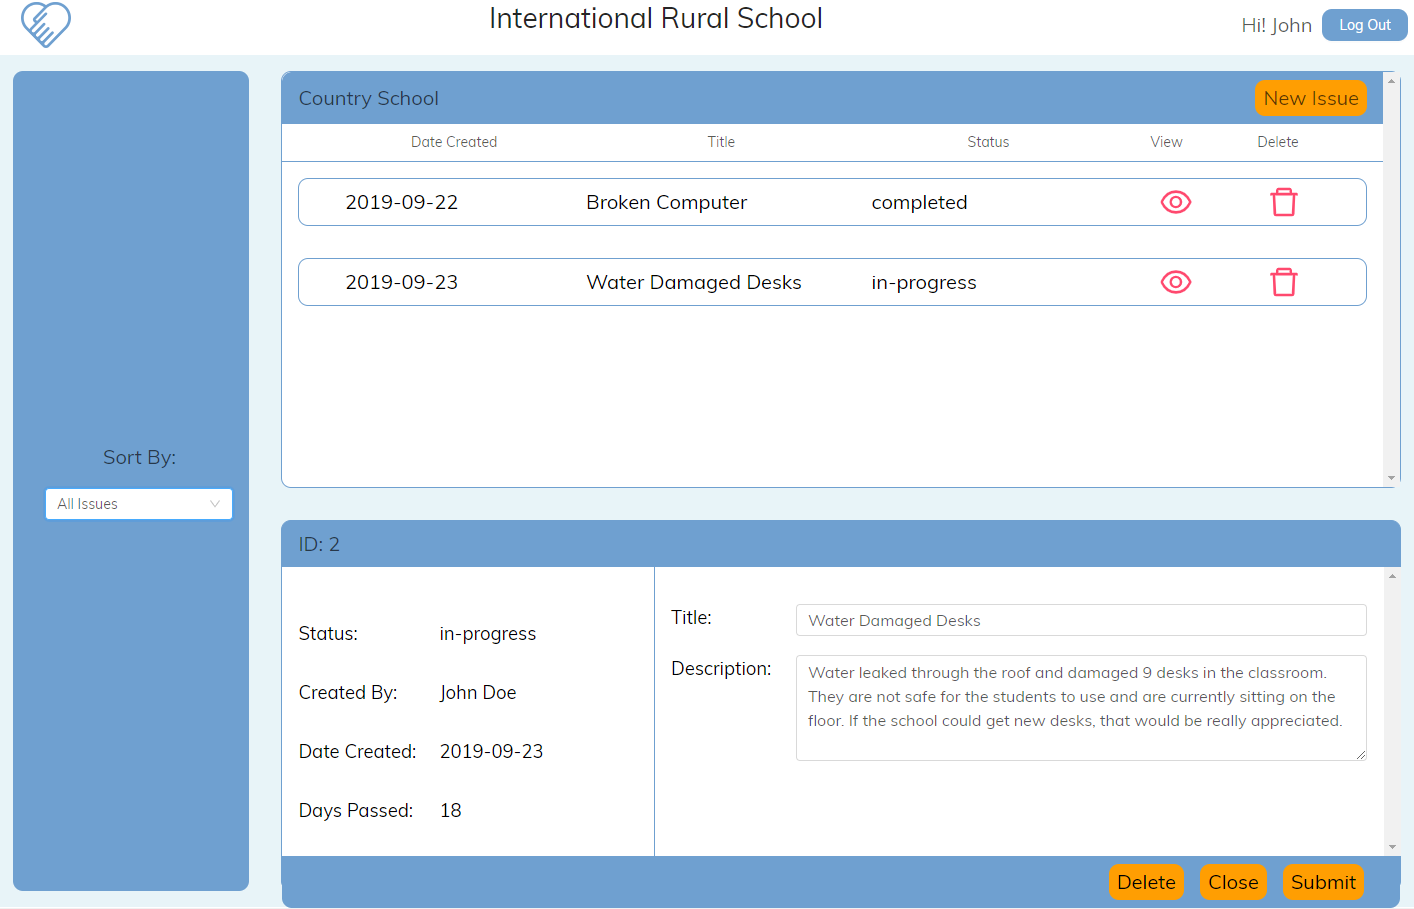 International Rural School Report Project